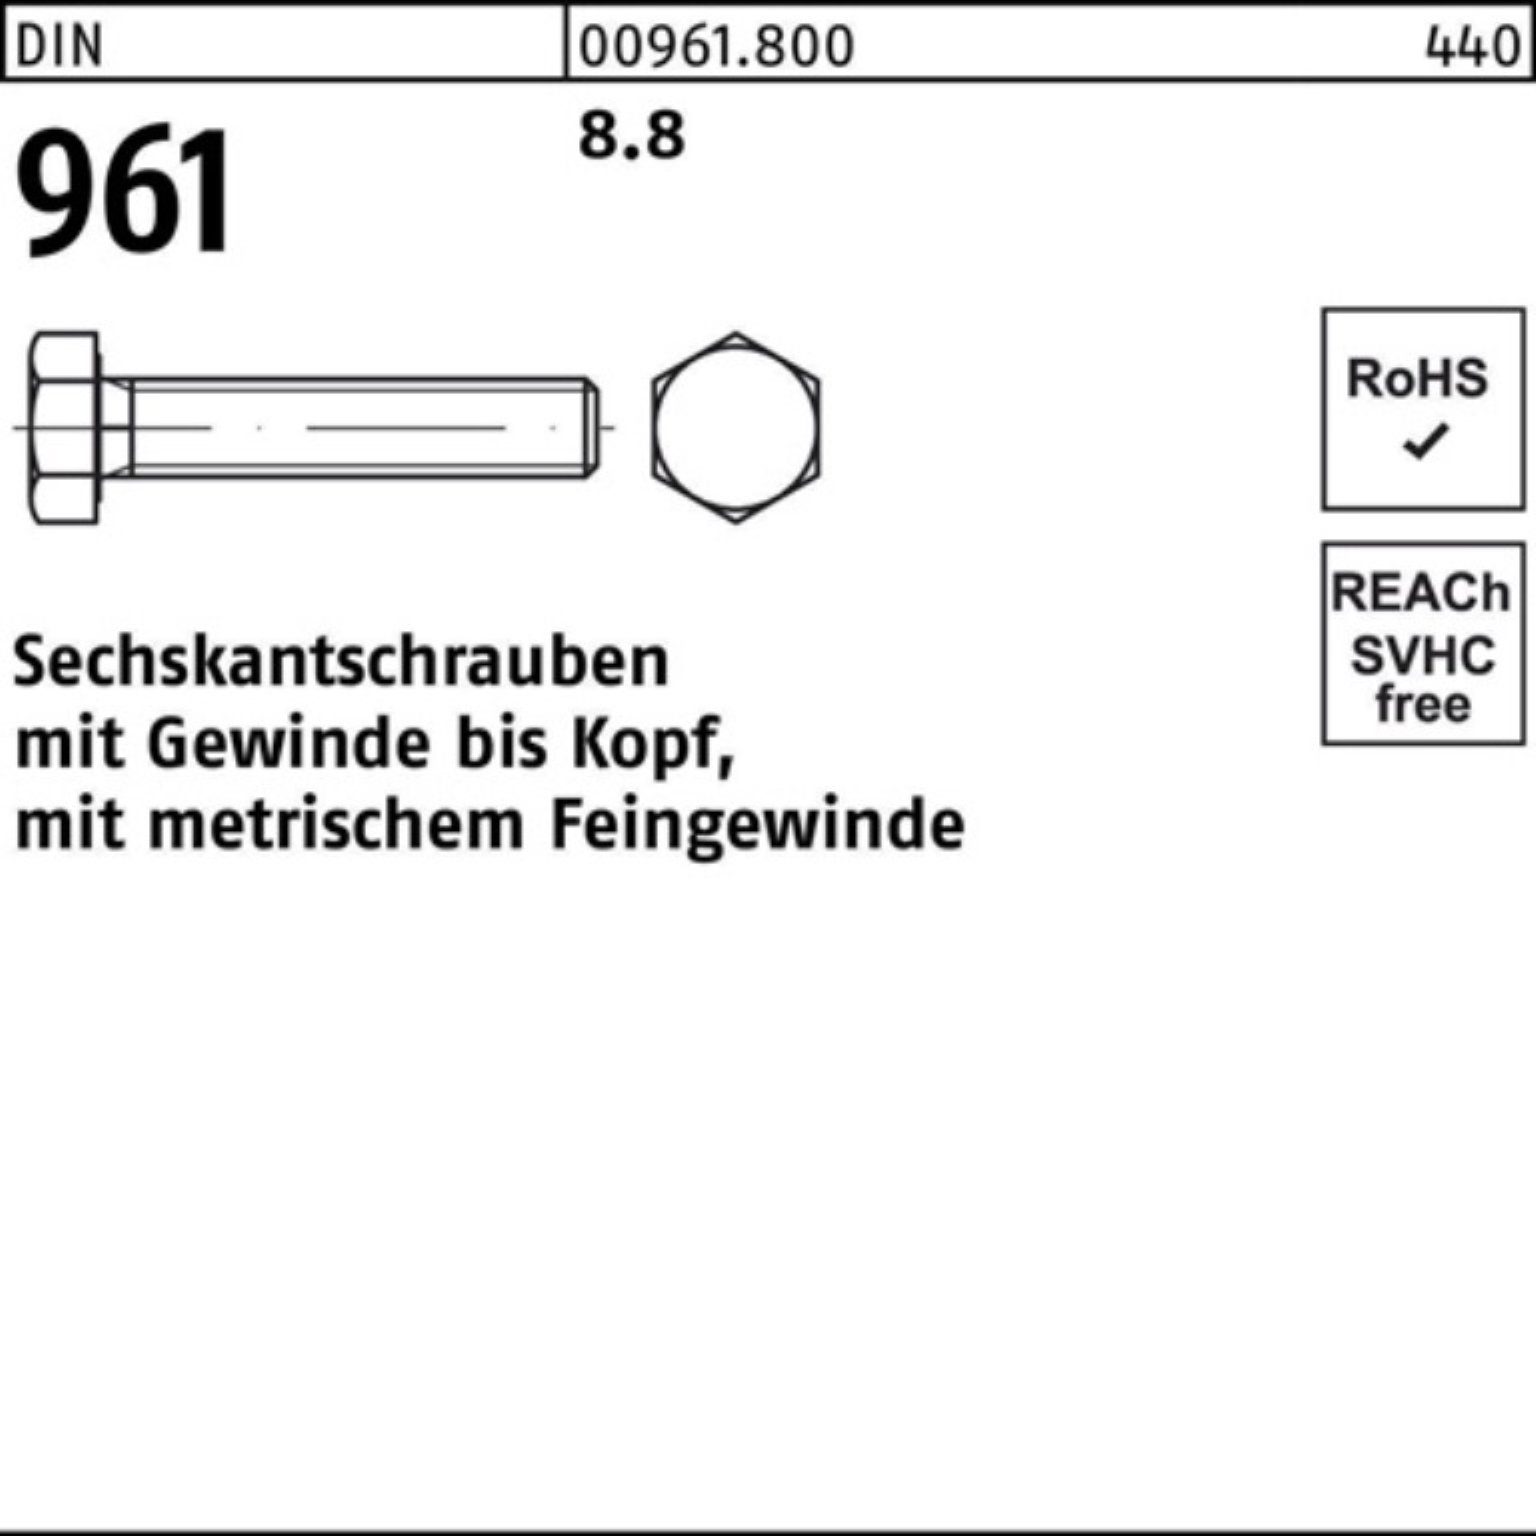 Reyher Sechskantschraube 100er Pack VG 80 M14x1,5x 961 DIN Stück 8.8 DIN Sechskantschraube 50